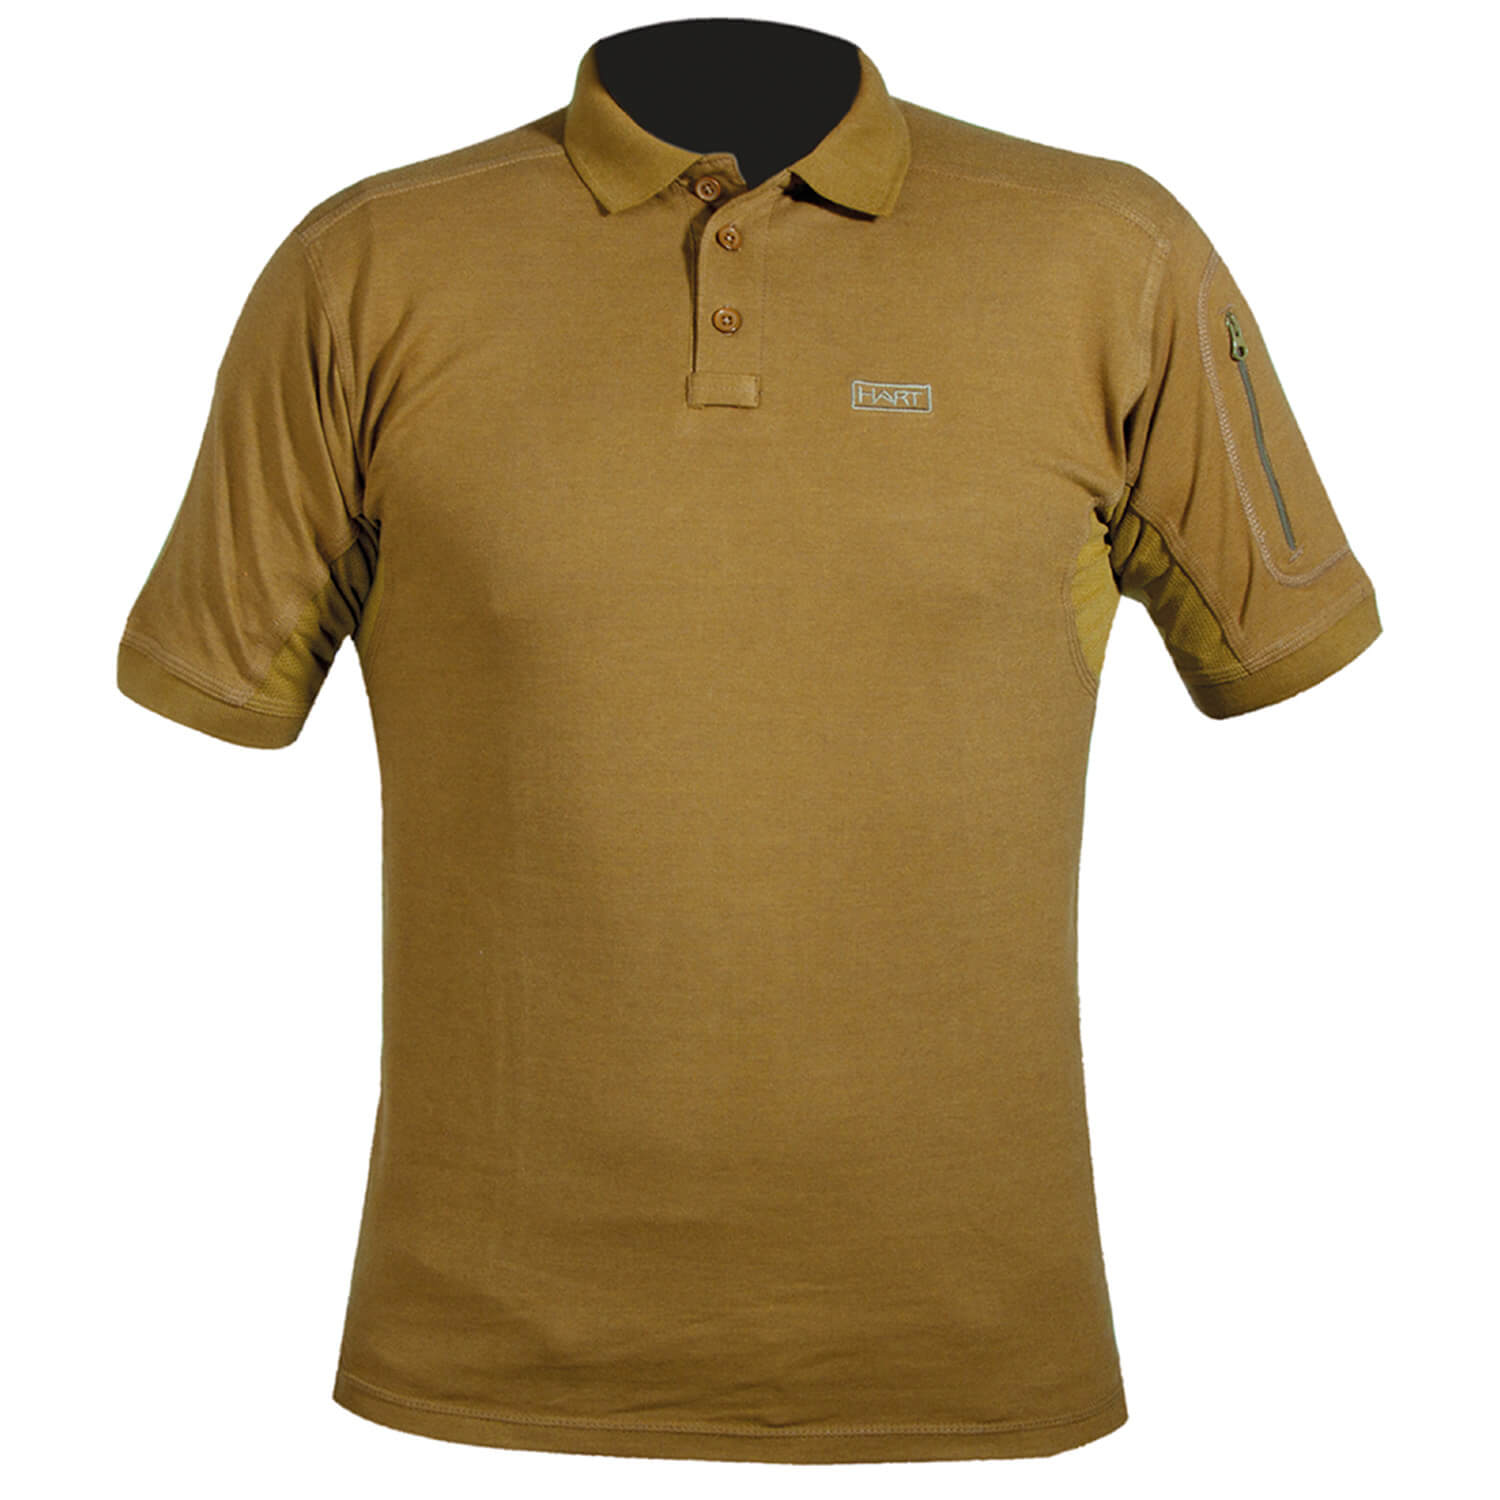  Hart Poloshirt Ivoor (bruin) - Jachtshirts